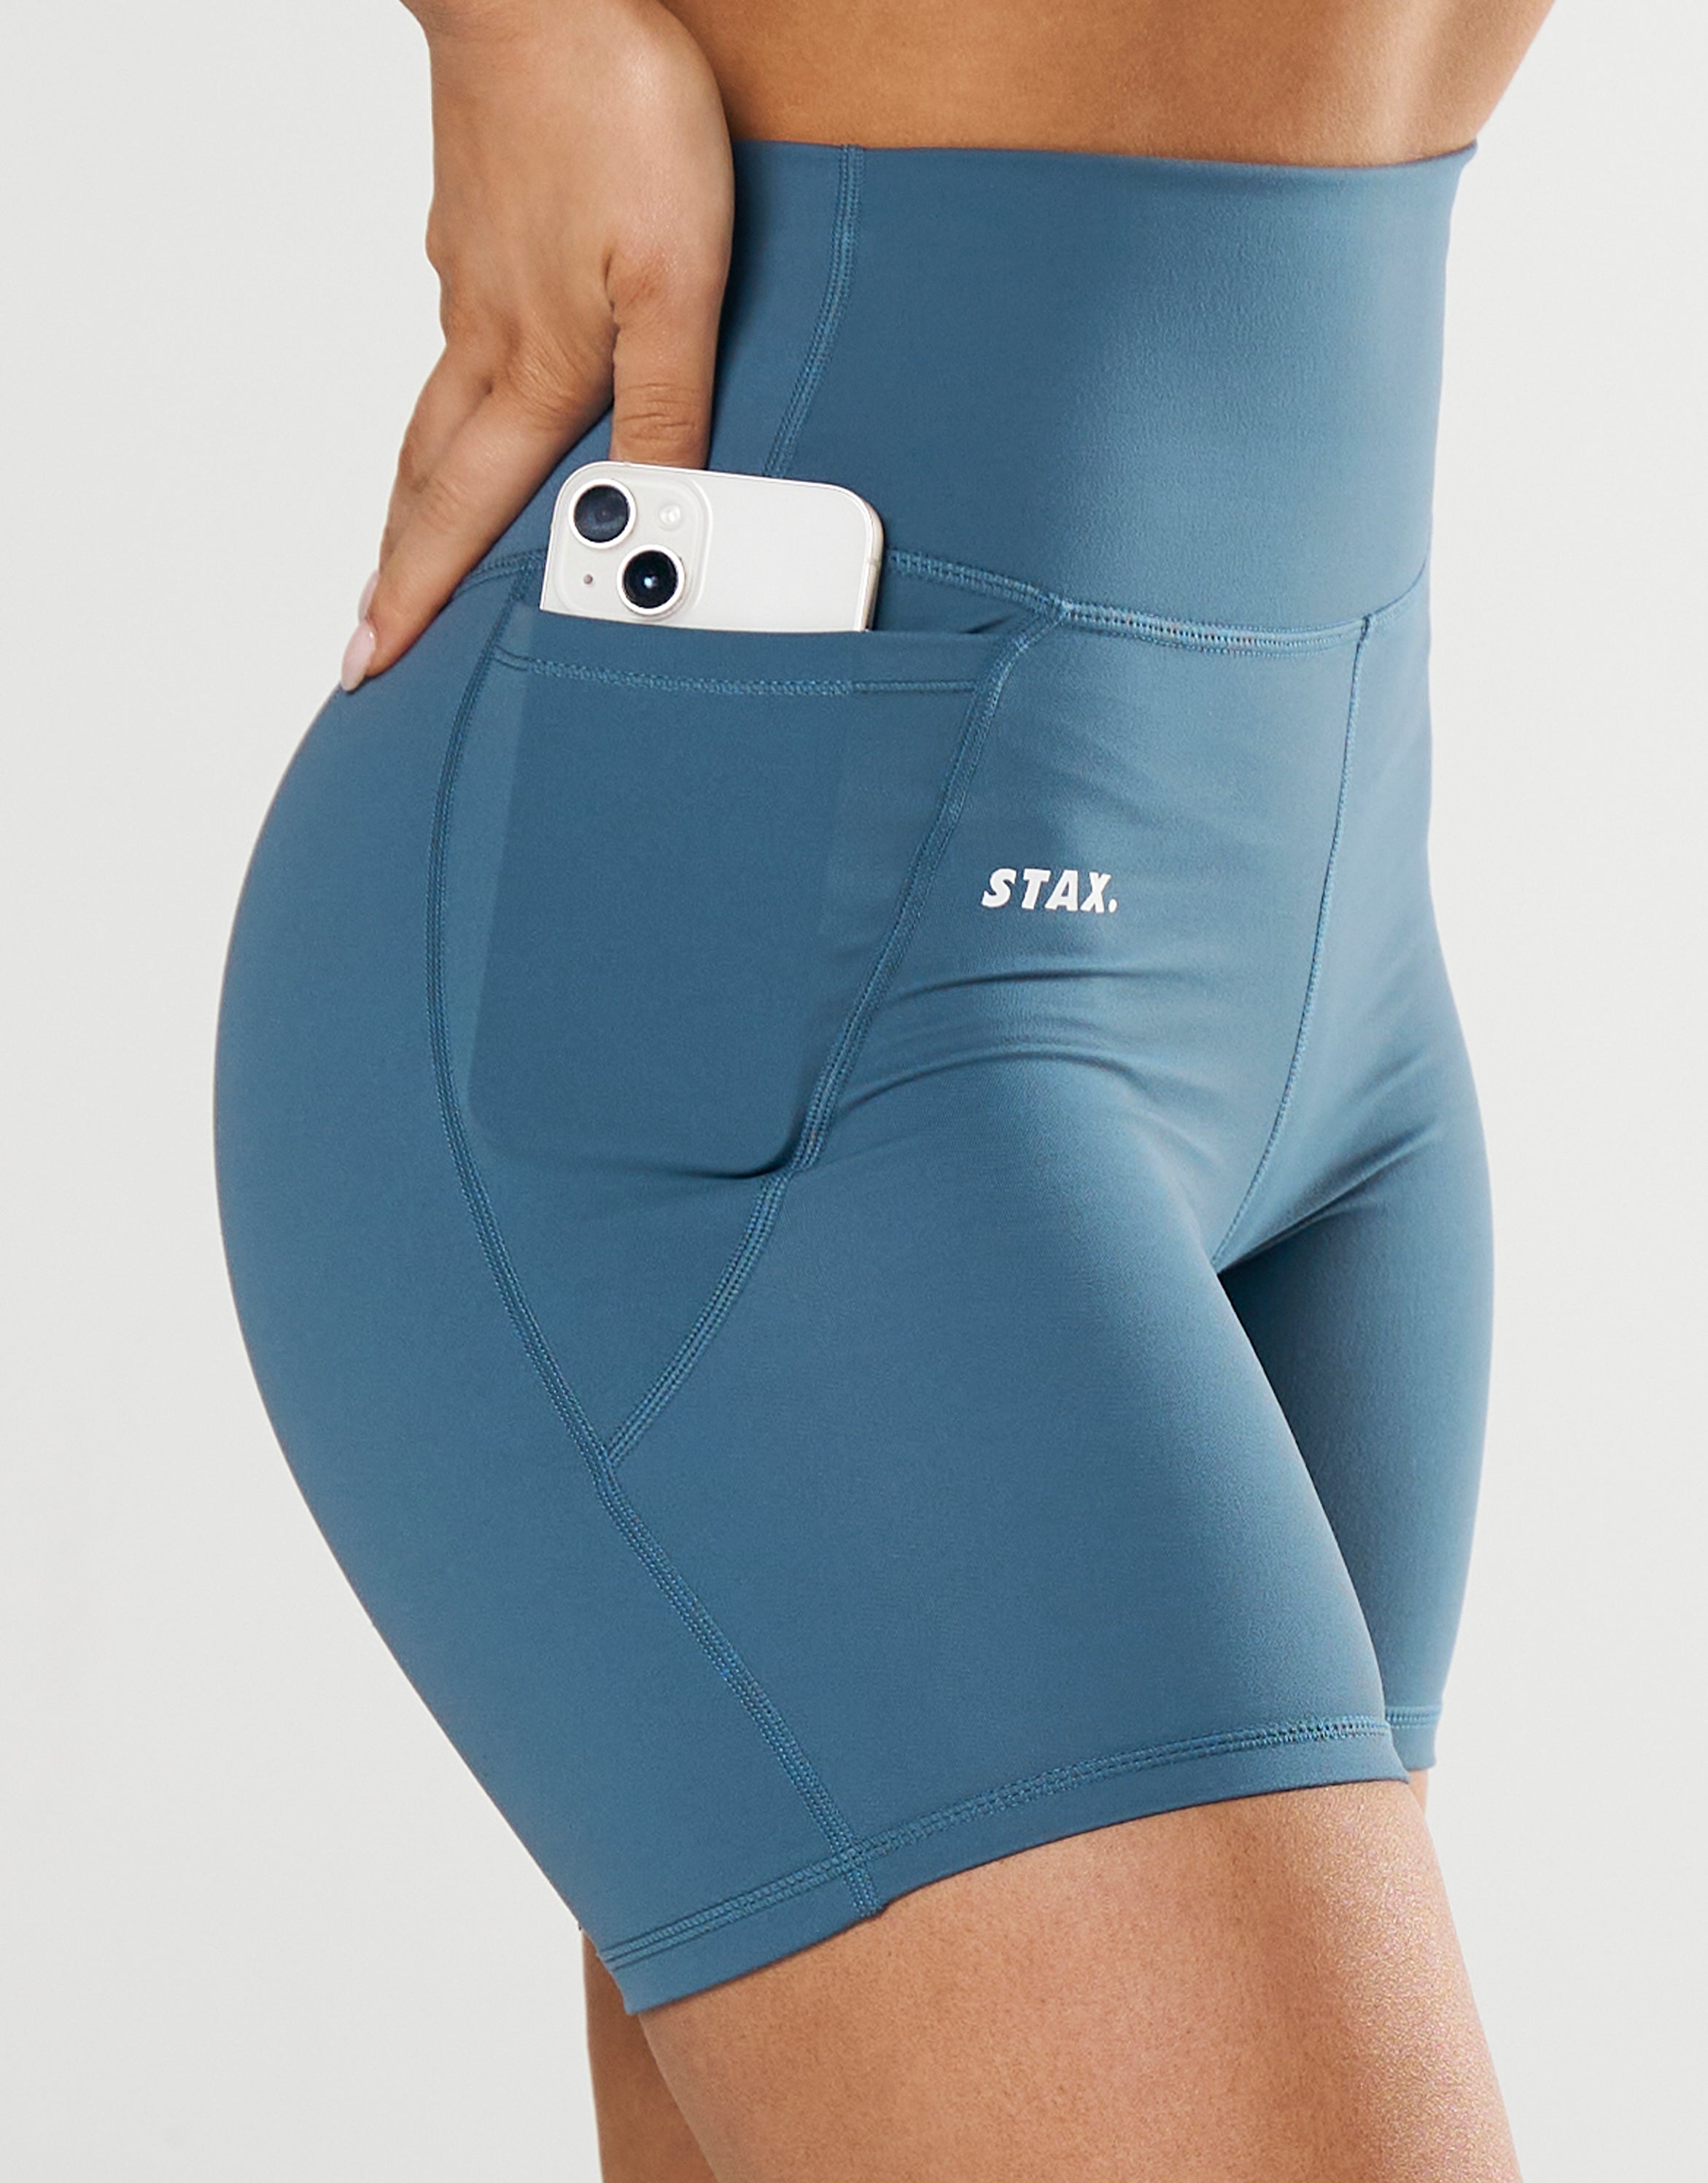 stax-phone-pocket-midi-bike-shorts-nandex-dark-blue